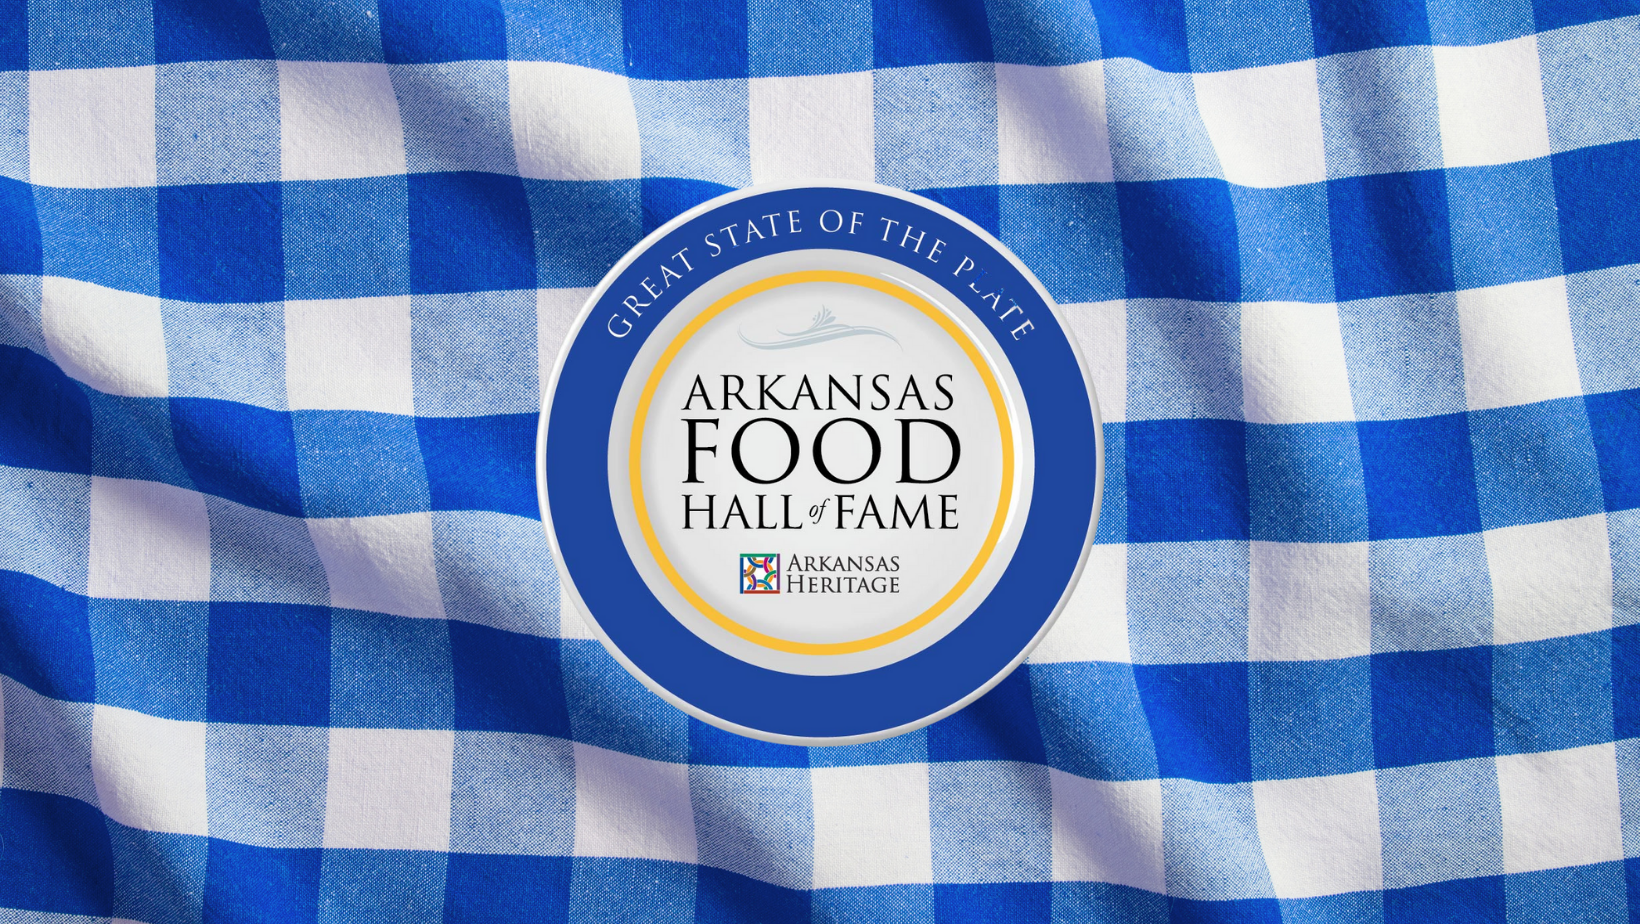 Arkansas Food Hall of Fame Logo on Blue Cloth